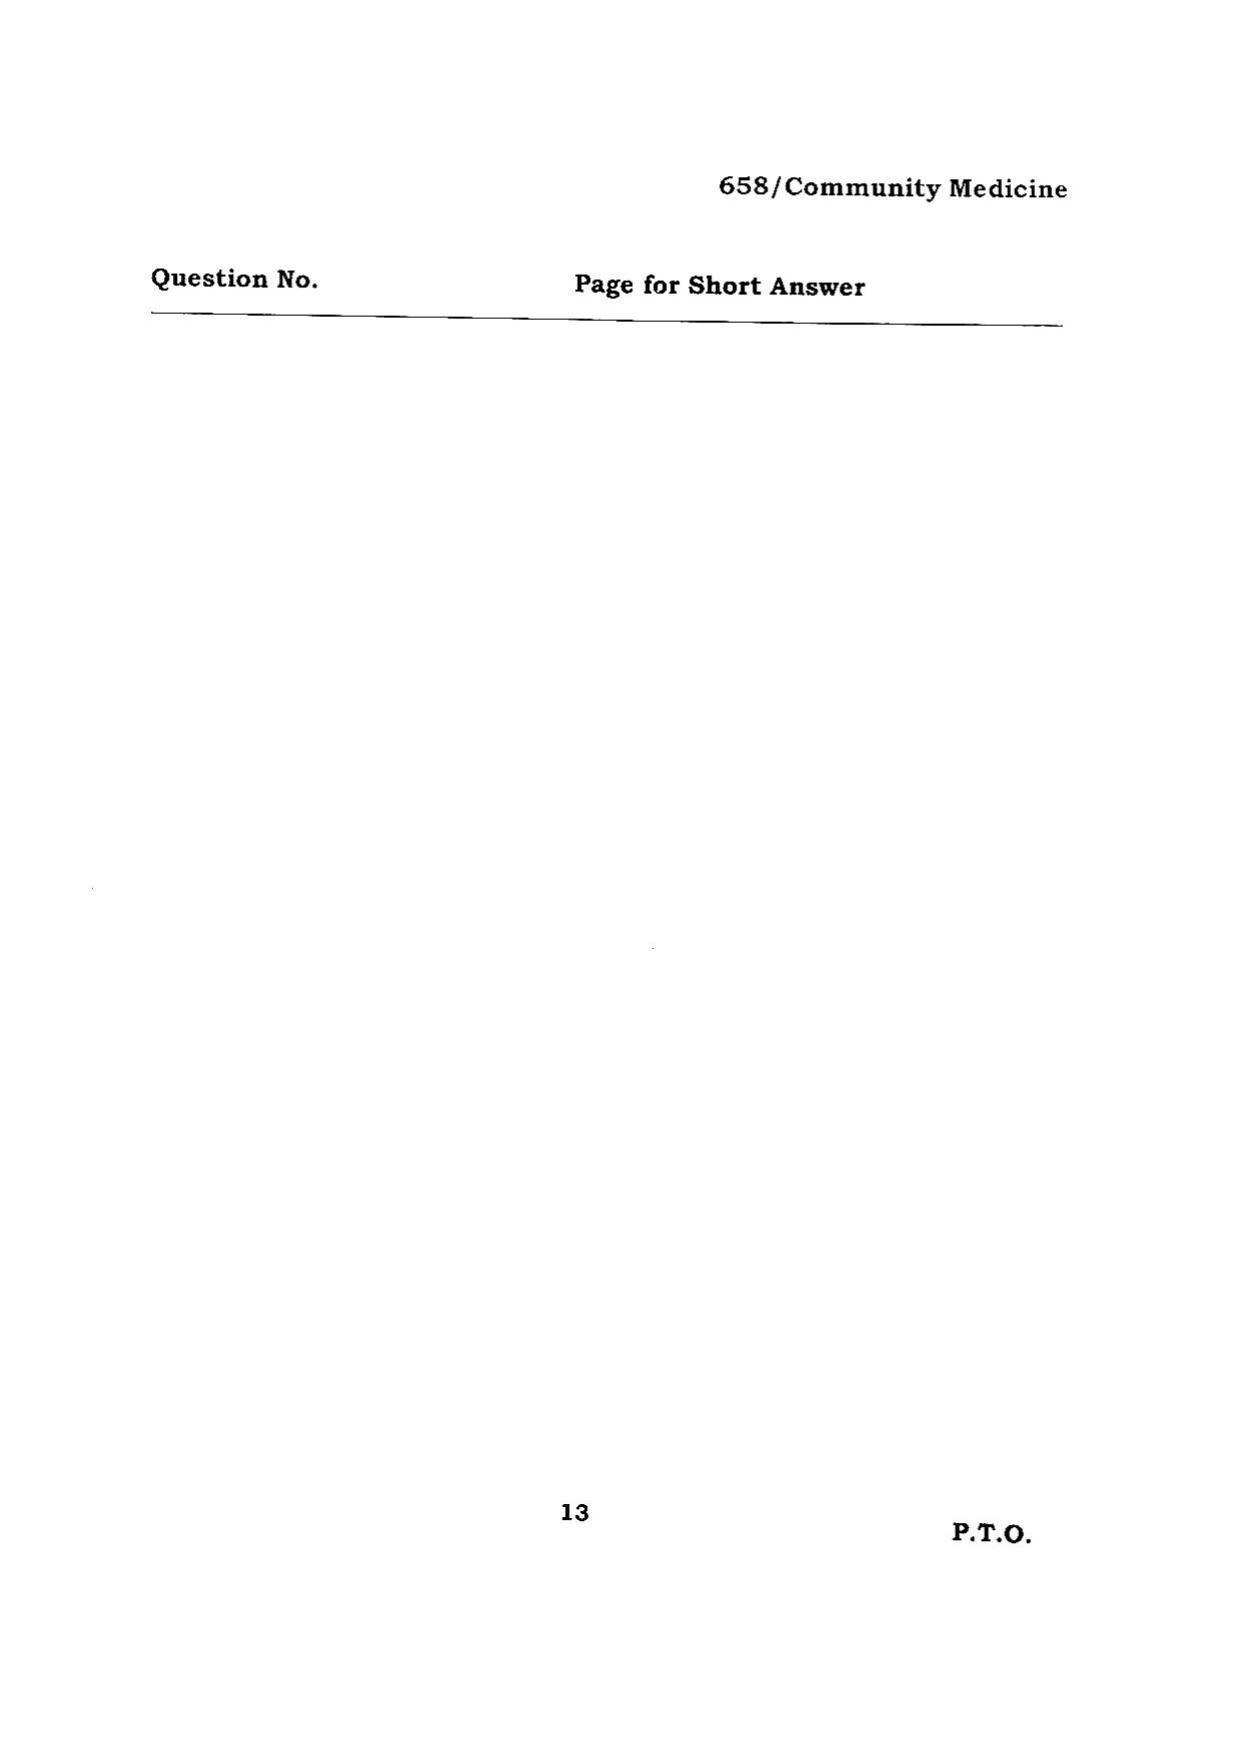 BHU RET COMMUNITY MEDICINE 2015 Question Paper - Page 13